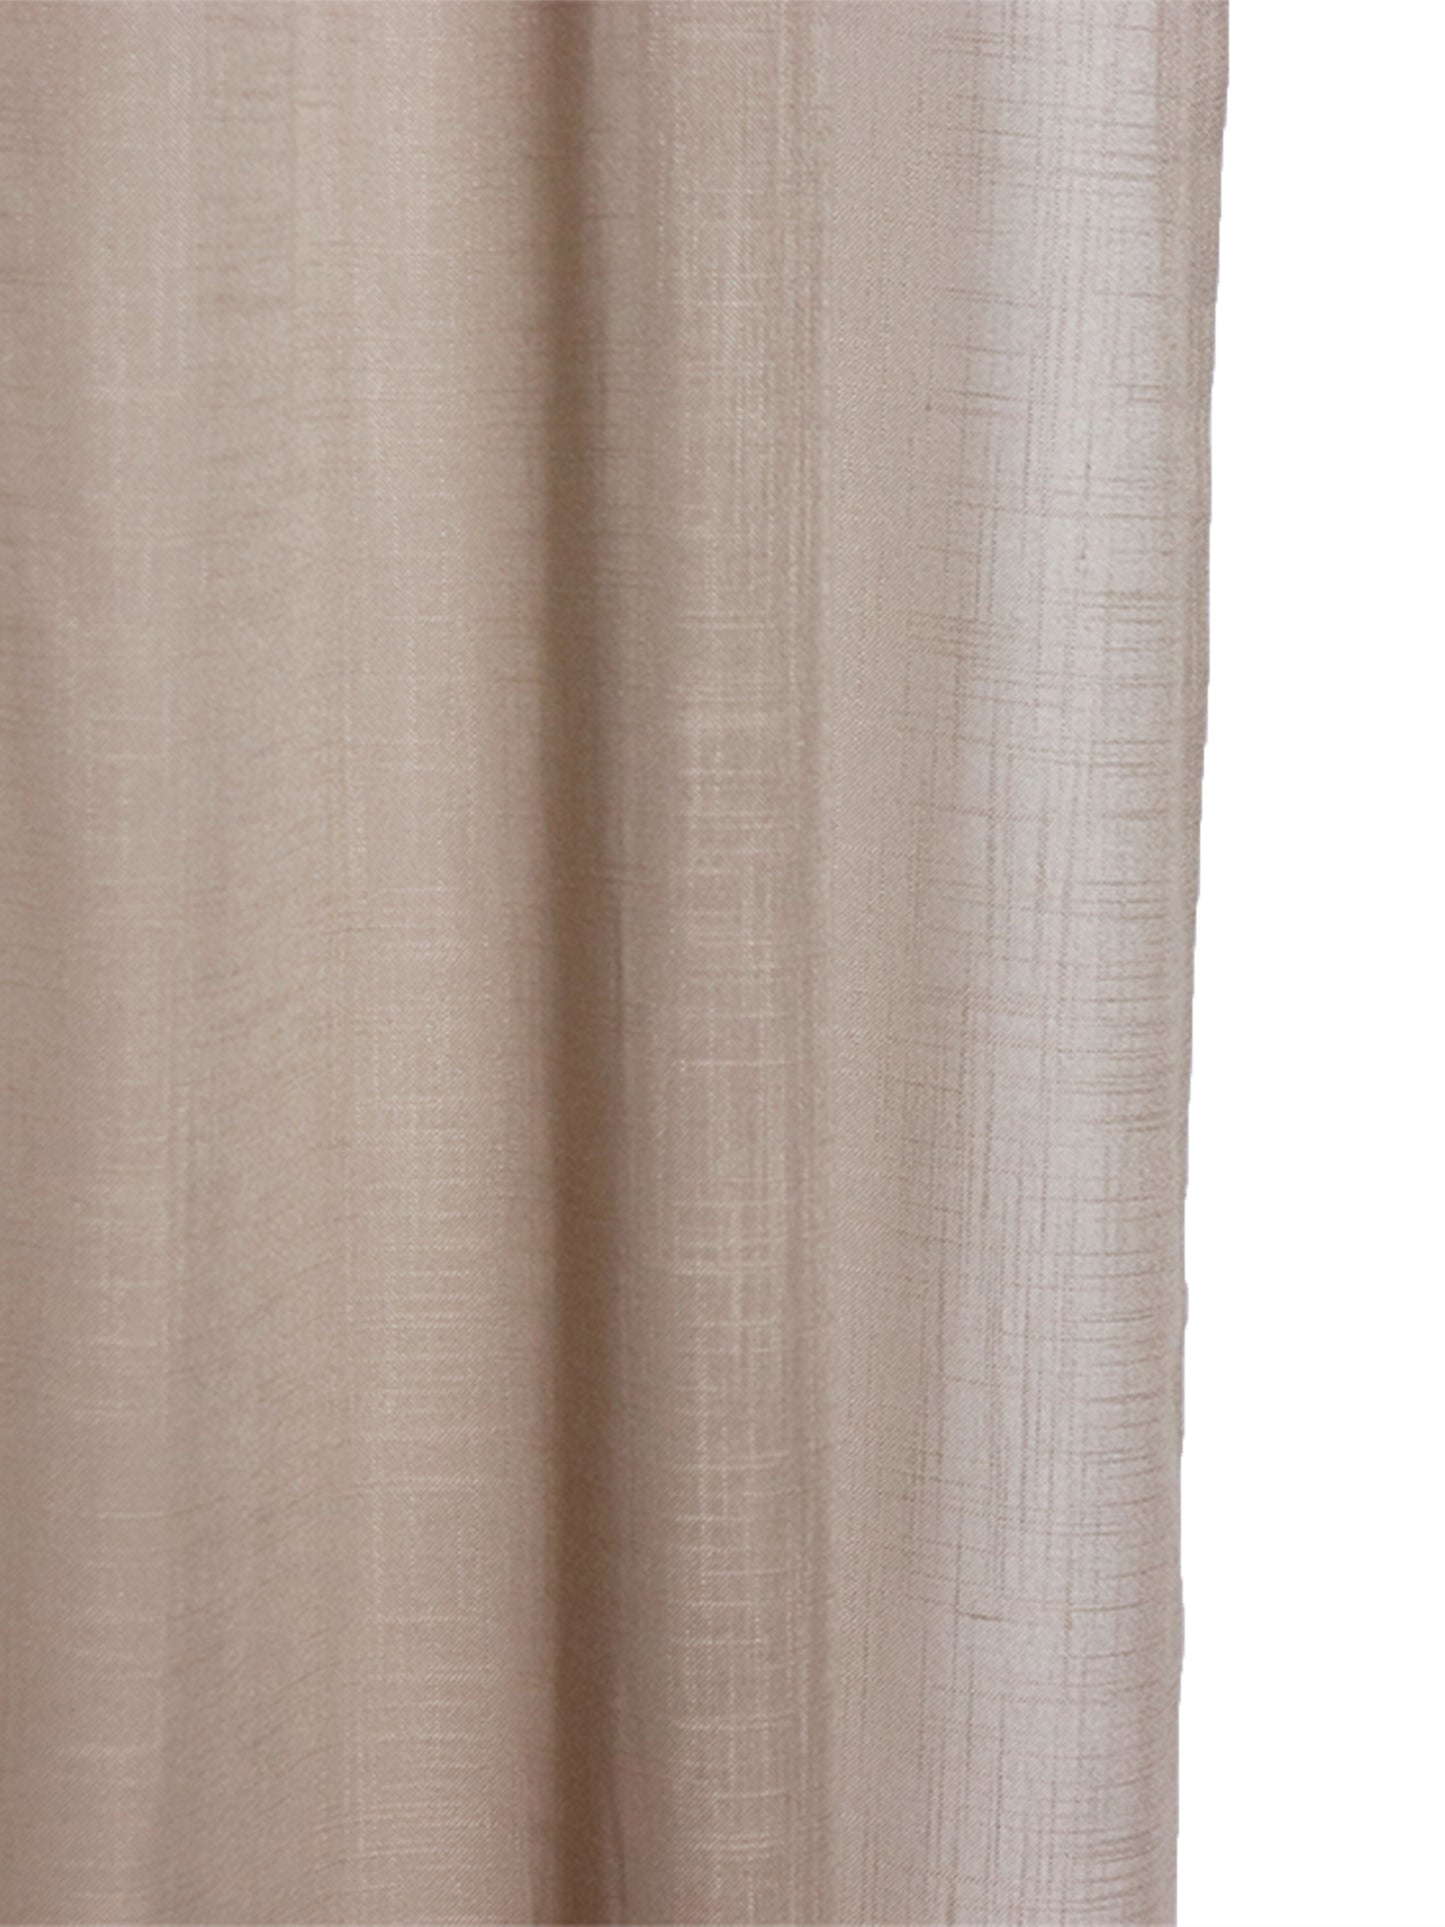 closeup of door sheer curtain in golden cream color with 54x84in size